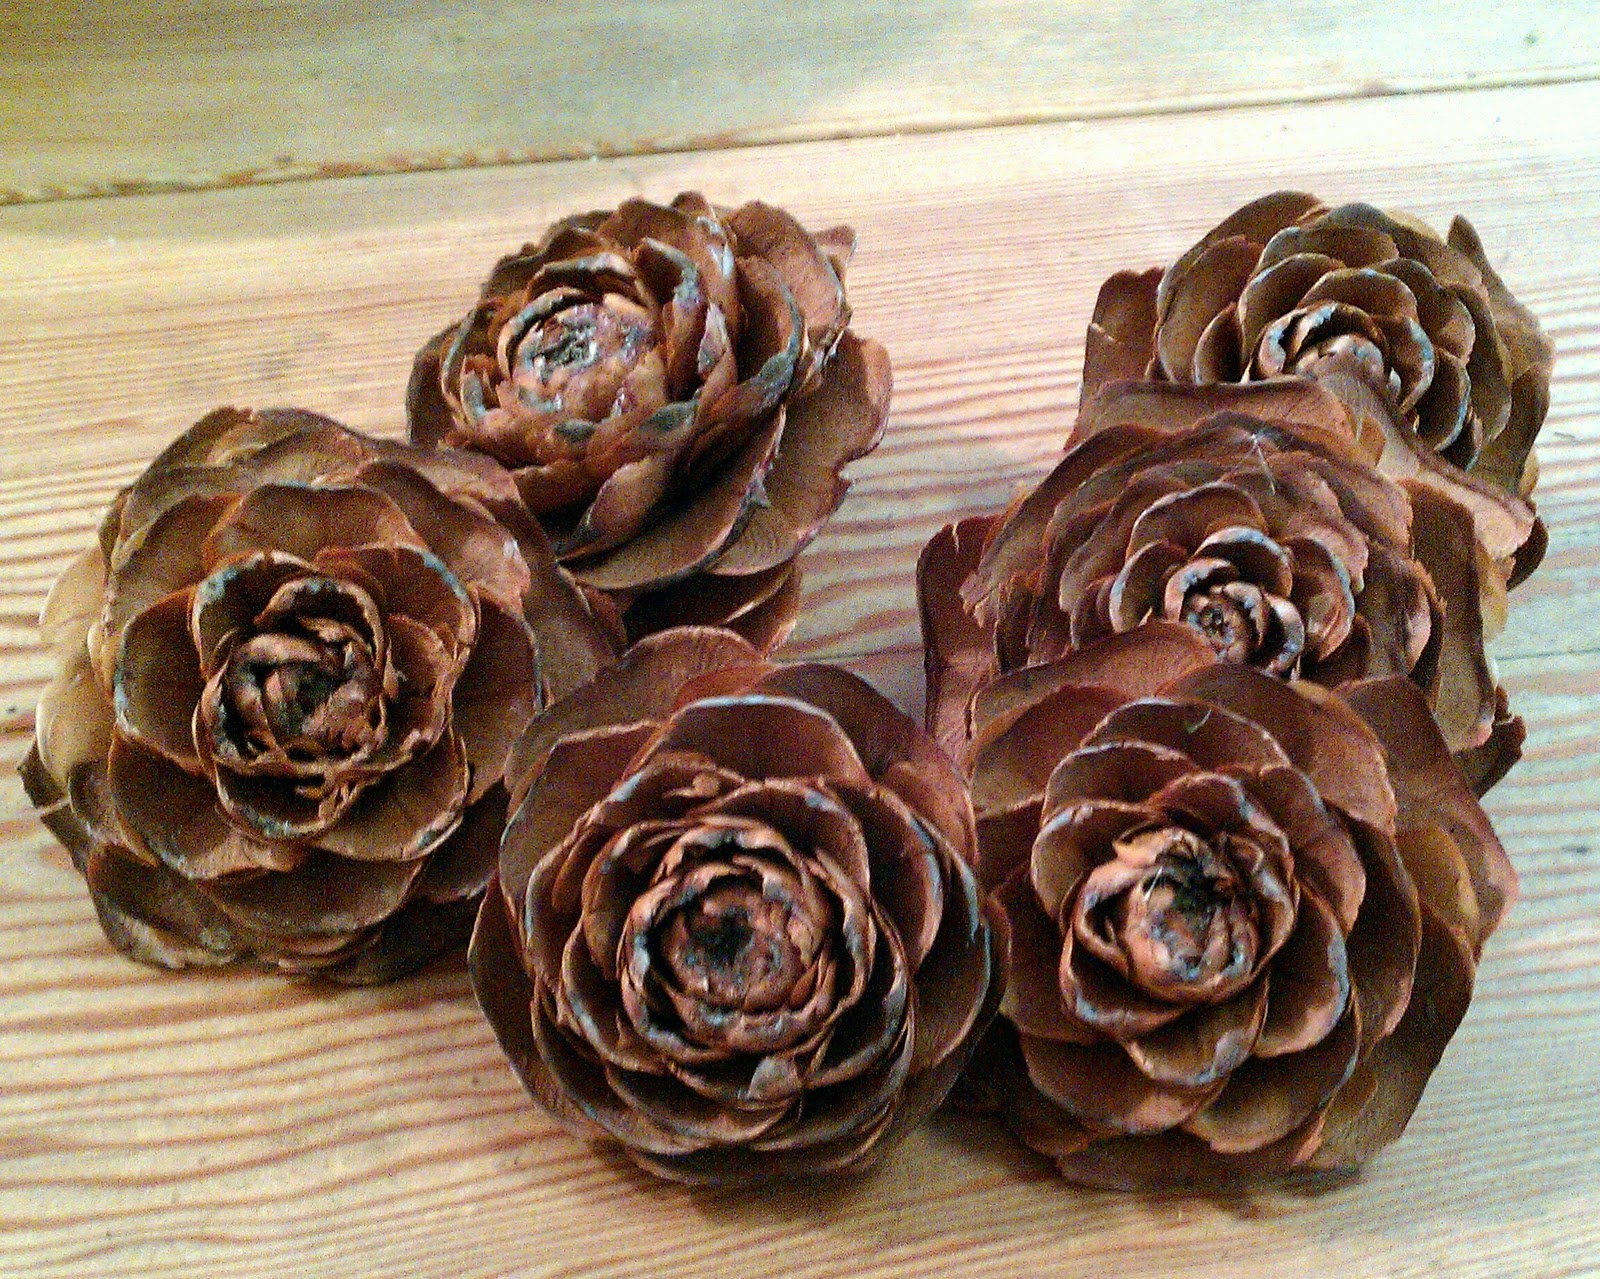 11/03 - Pine cones that look like roses.